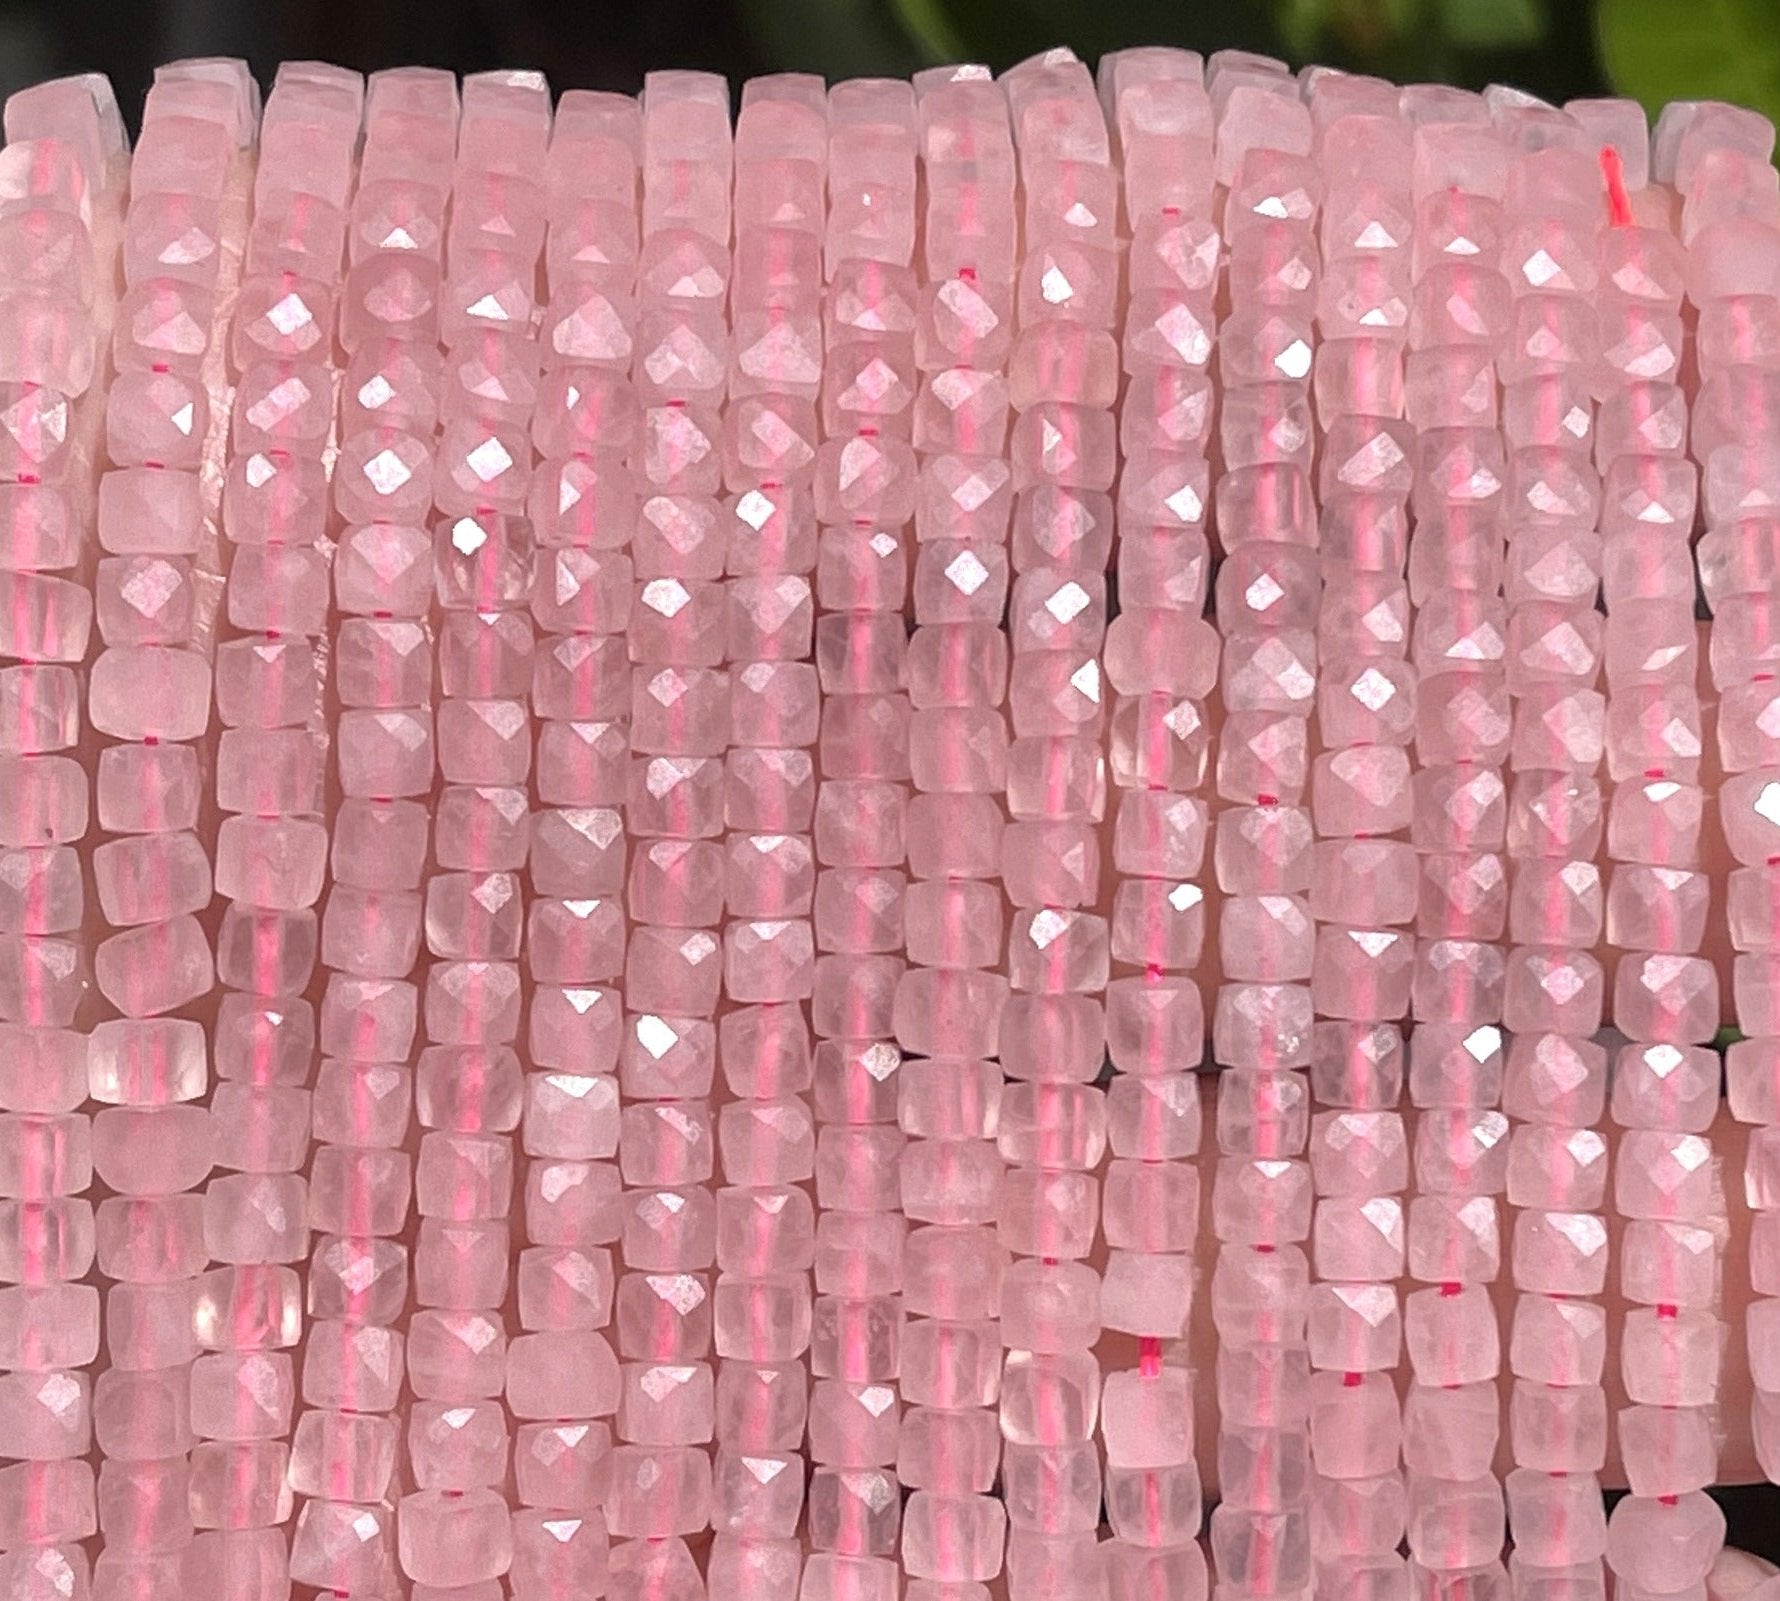 Rose Quartz 4mm faceted cube natural gemstone beads 15" strand